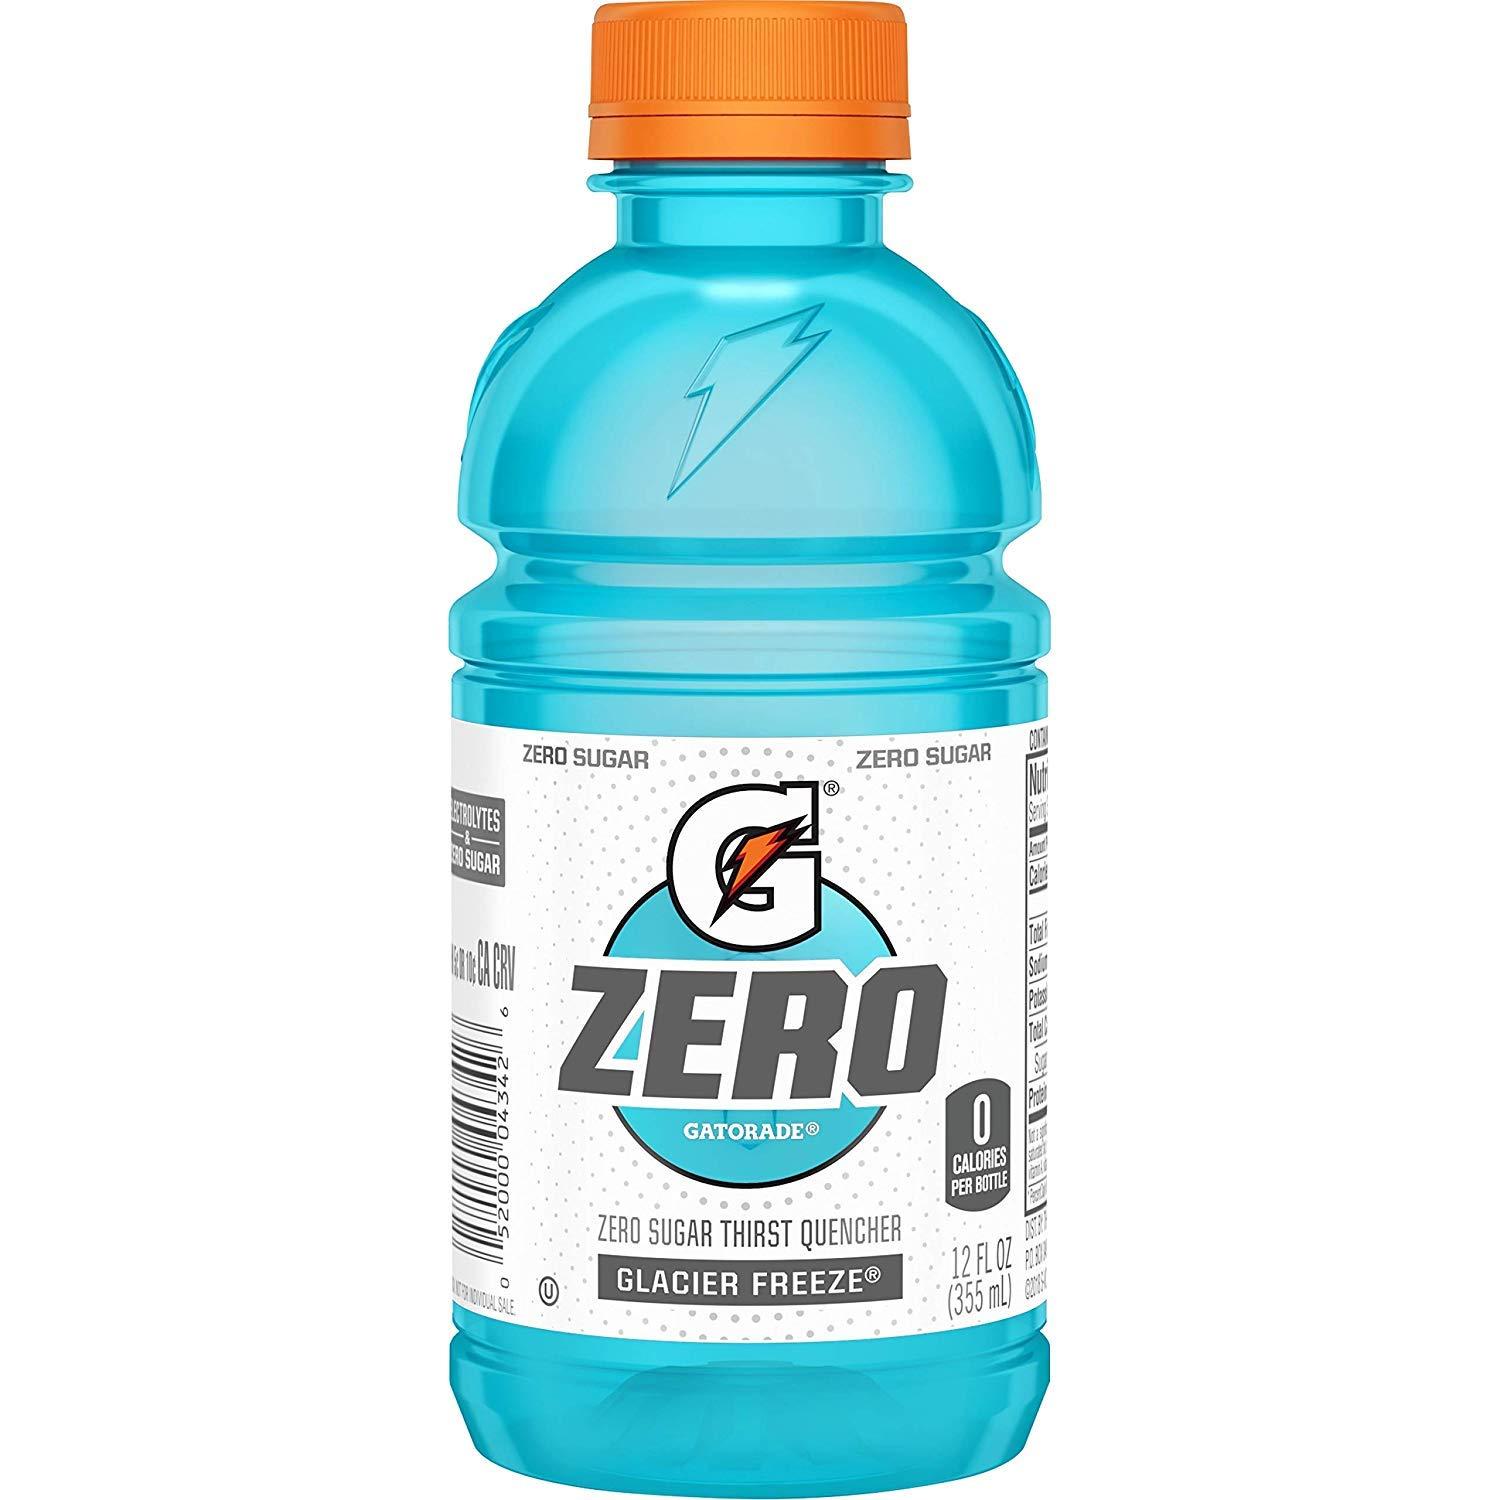 Gatorade Zero Sugar Thirst Quencher, Glacier Freeze, 12 Ounce, 24 Count Glacier Freeze Drink